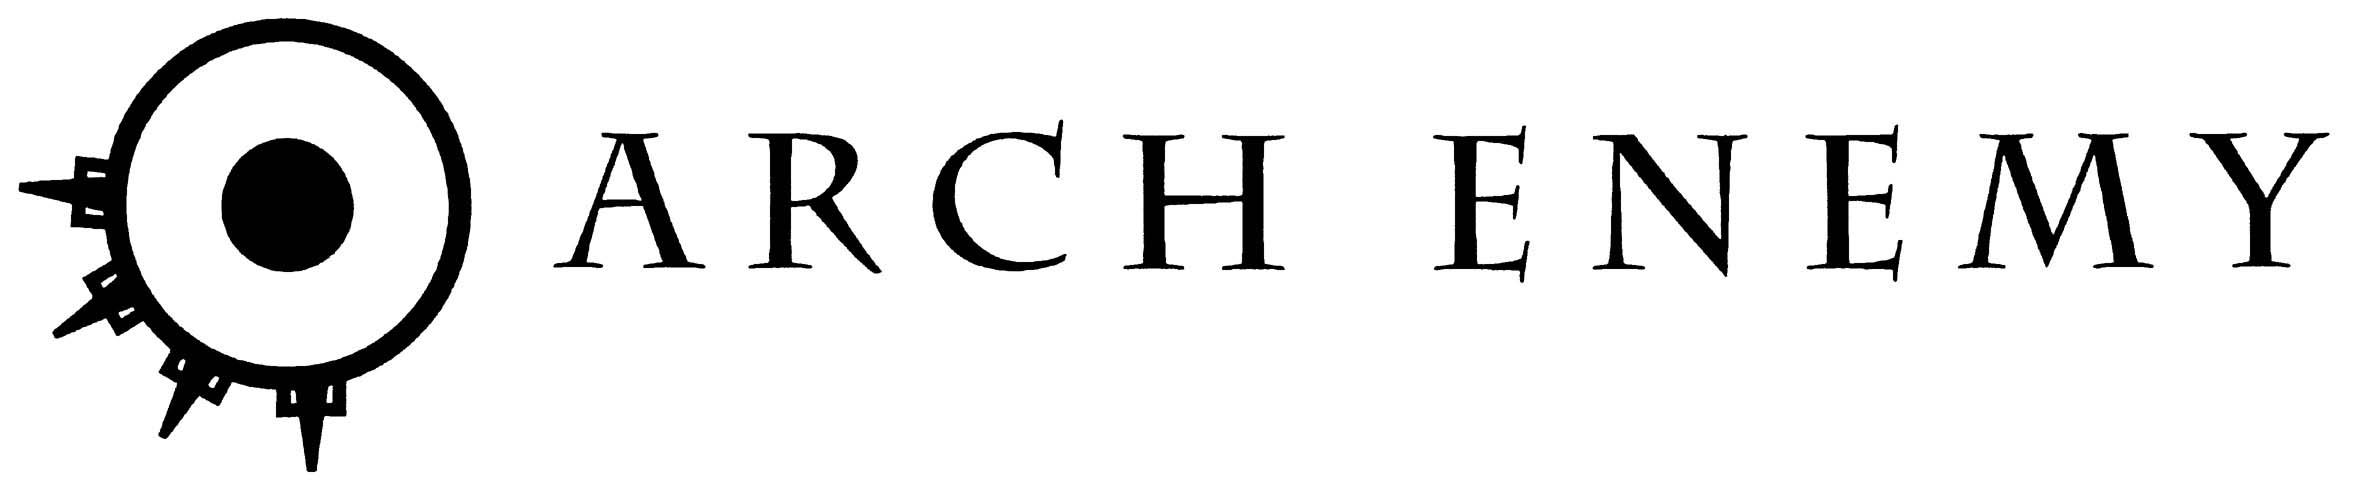 Arch Enemy Decal / Sticker 02